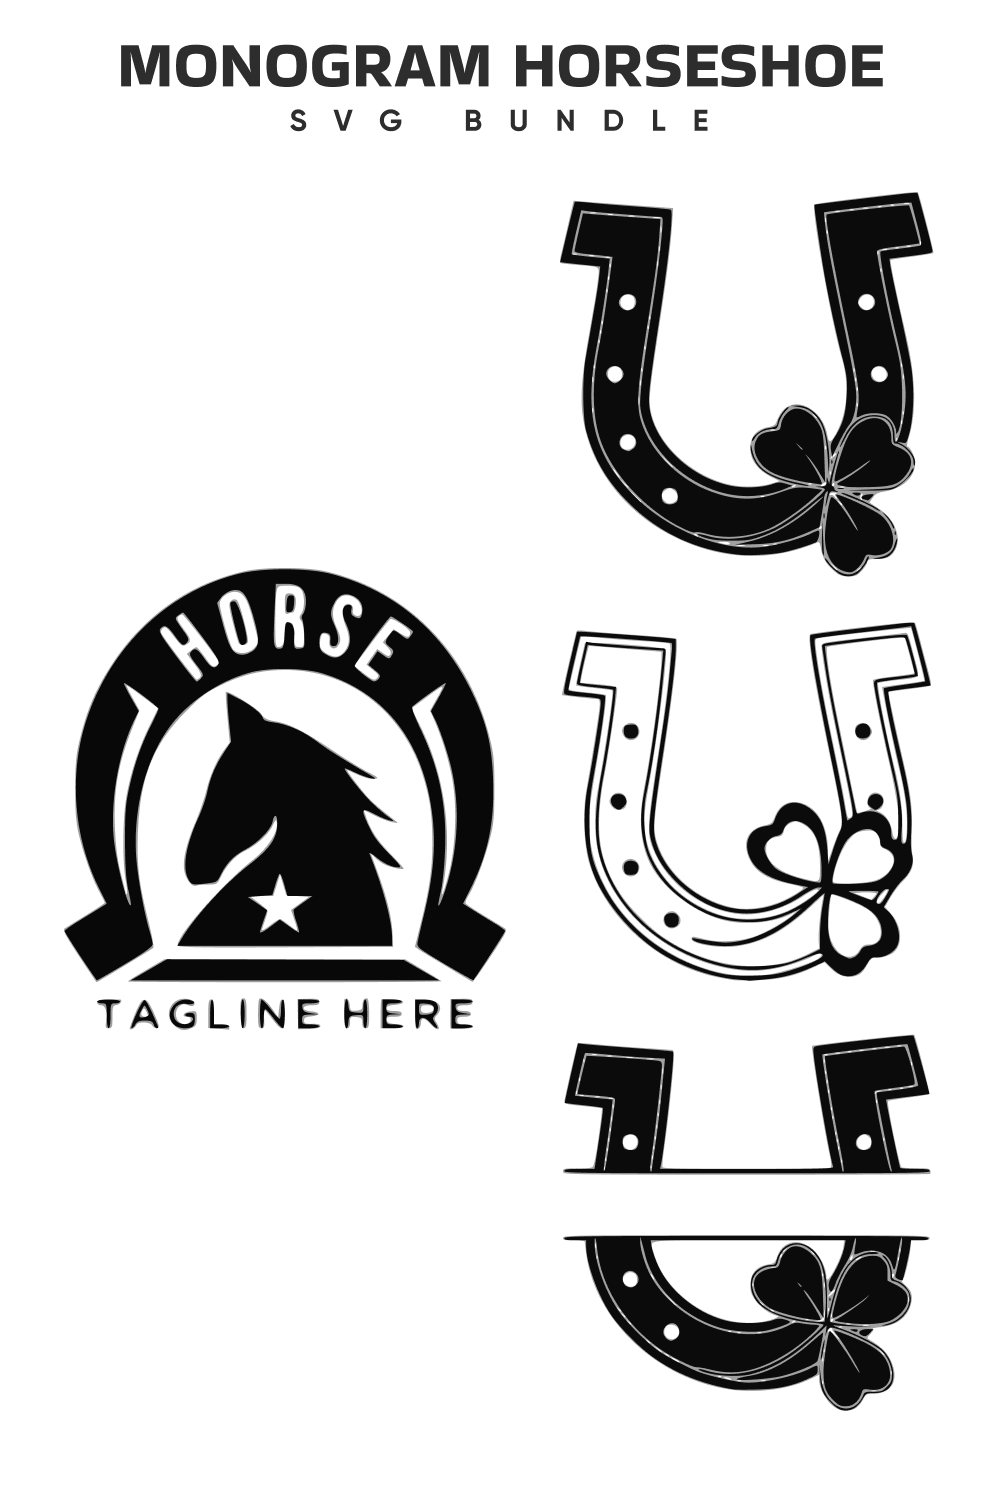 The monogram horse shoe logo is shown.